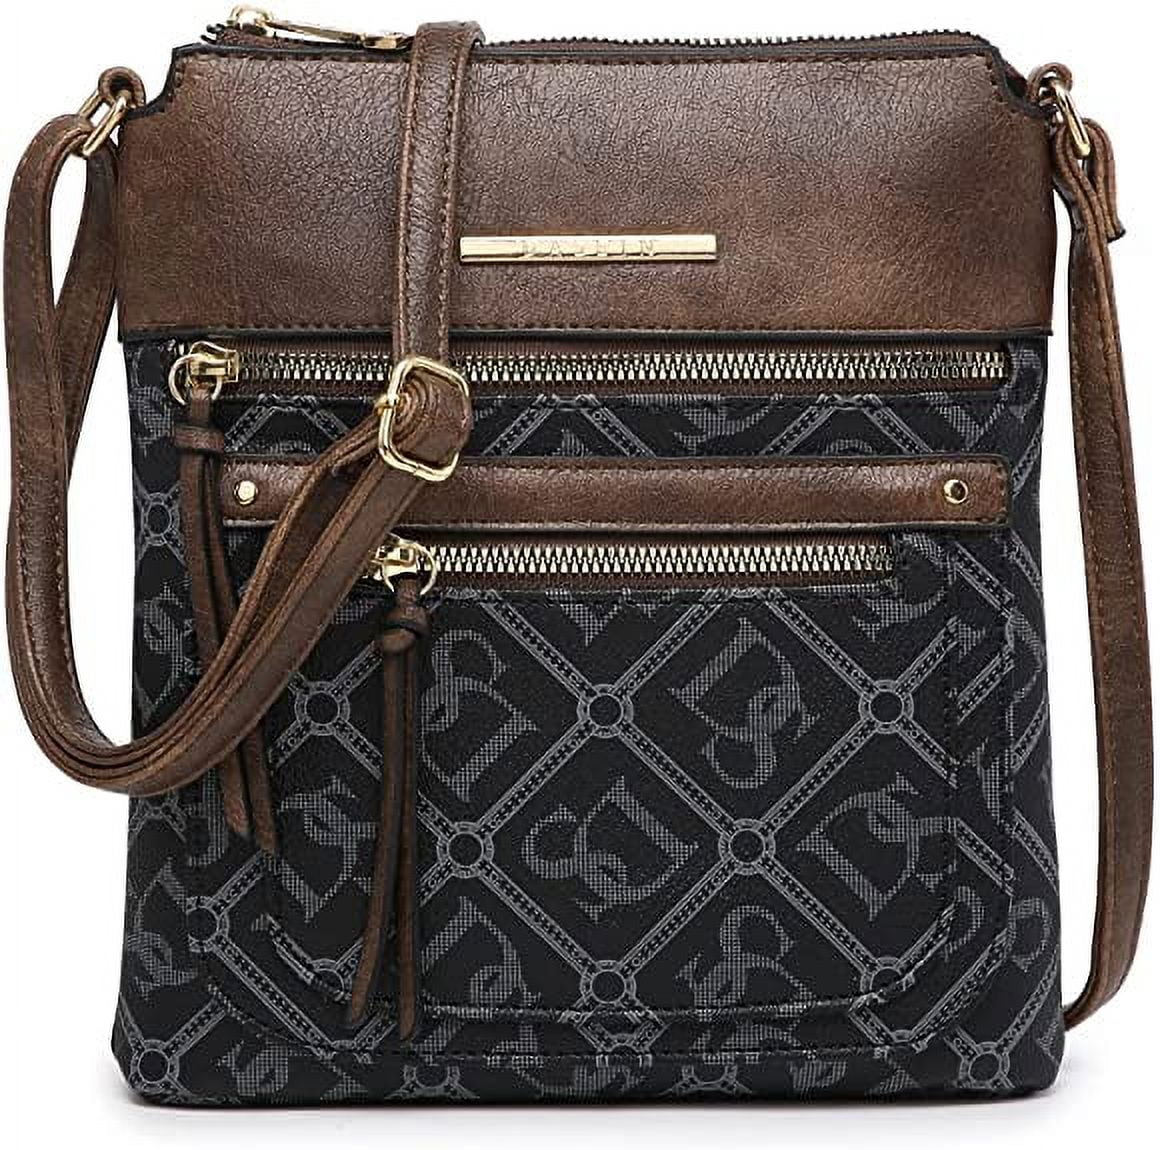 Lightweight Crossbody Bags for Women Shoulder Bag Purse Vegan Leather Soft Travel Handbag with Multi Pockets d9205248 4ed8 4d88 977b 2f454f5d8e11.aeb40ce707e39ce9f20c65024c3e1095